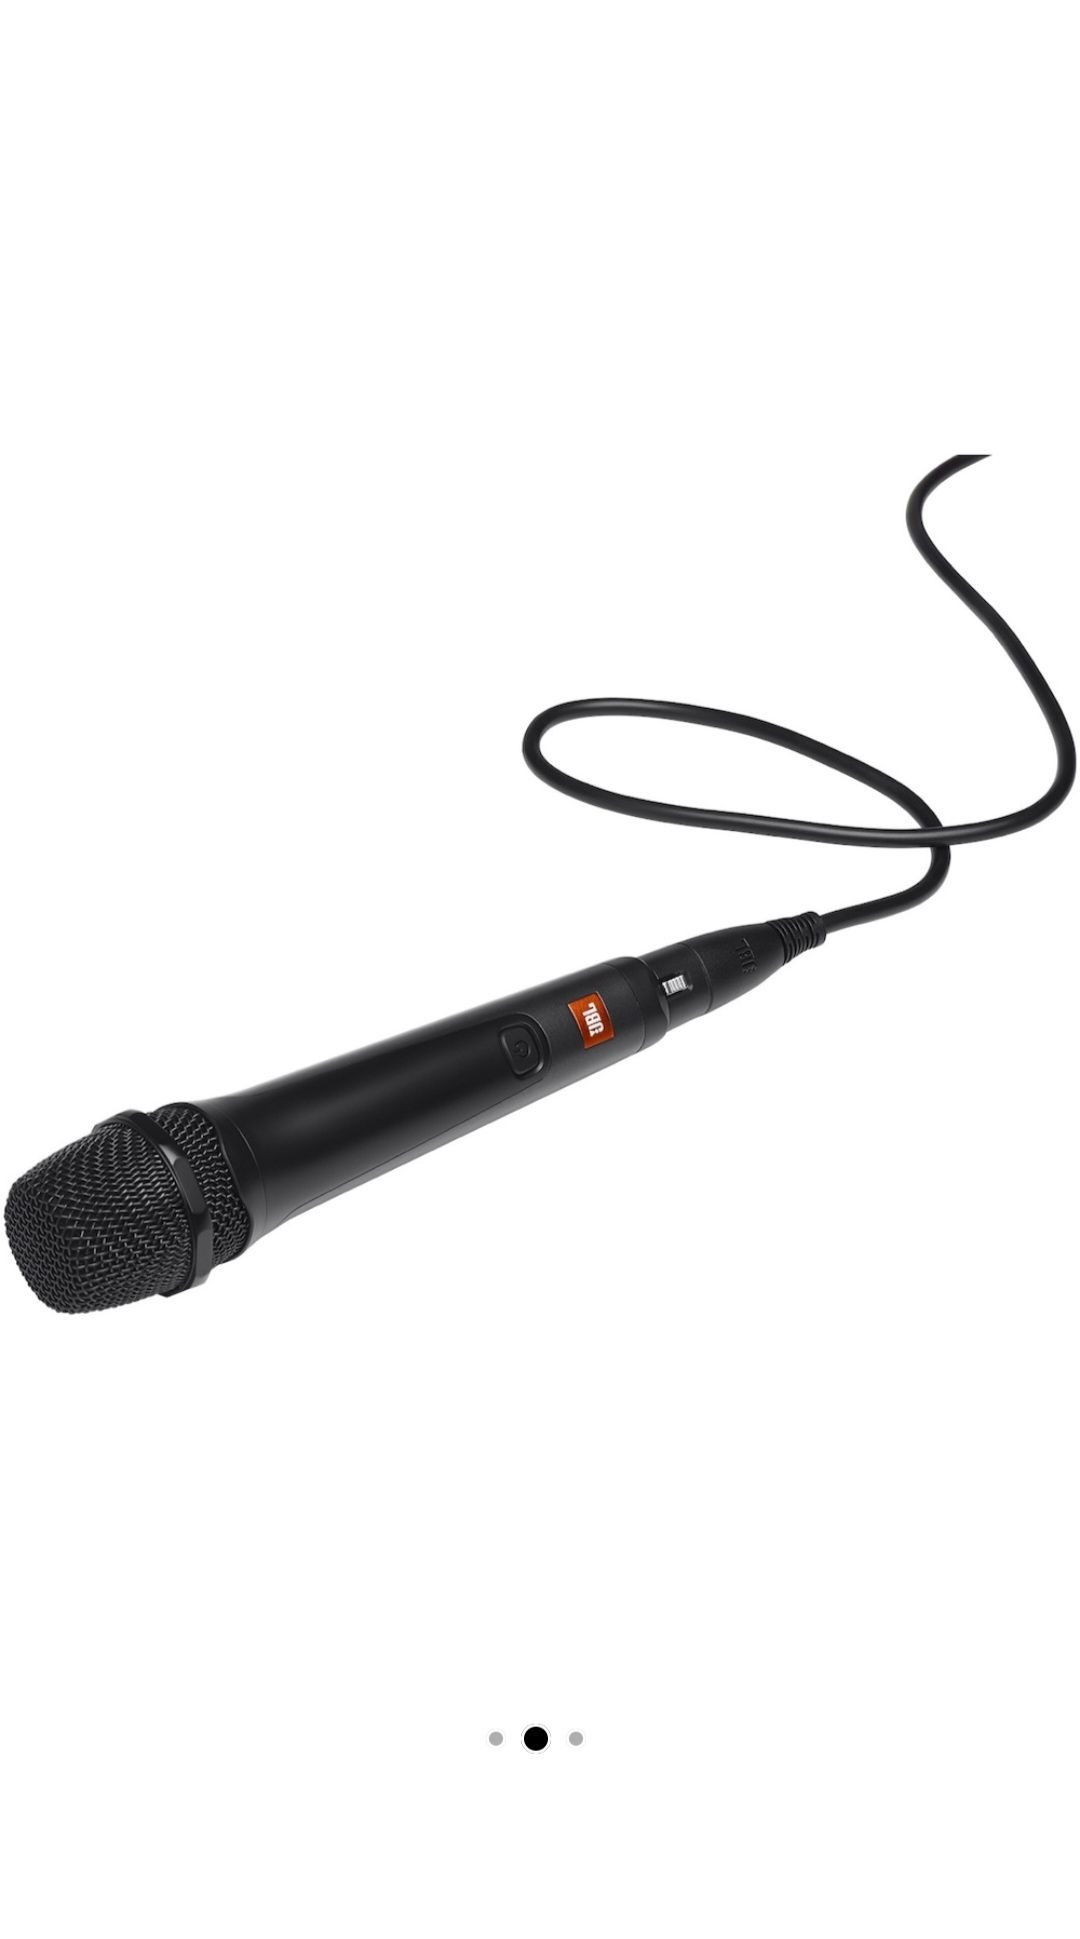 De vânzare! Microfon dinamic karaoke JBL!